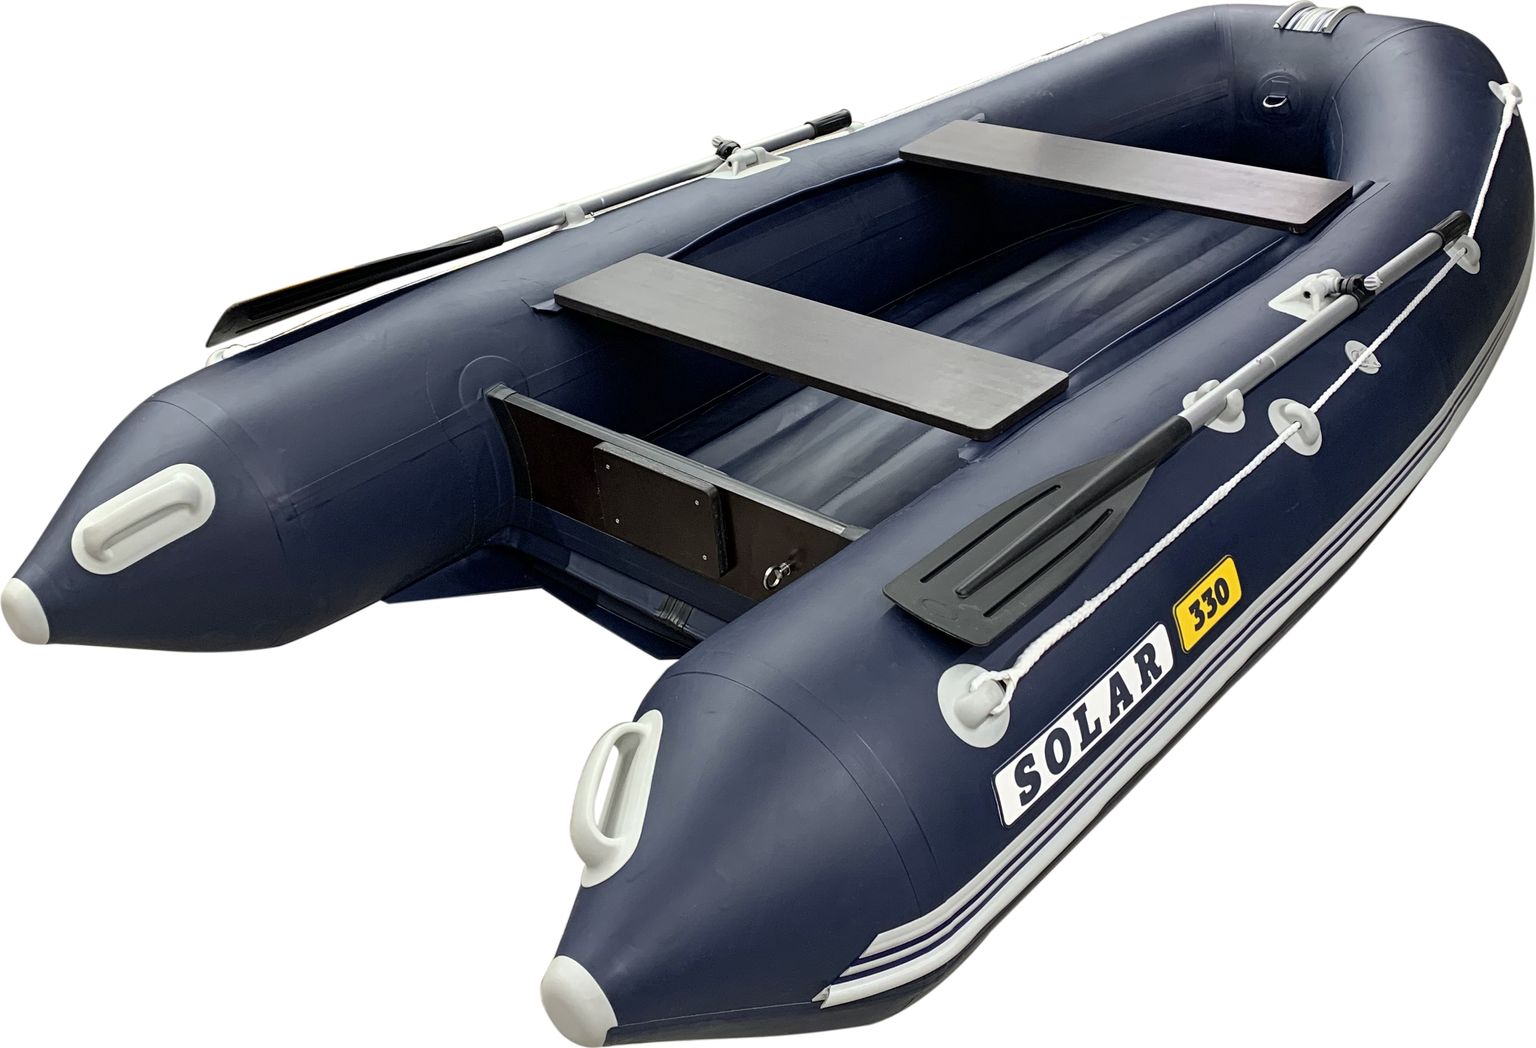 Надувная лодка ПВХ SOLAR-330 К (Оптима), синий SLR330k_opt_blue надувная лодка пвх solar 330 к оптима серый slr330k opt grey